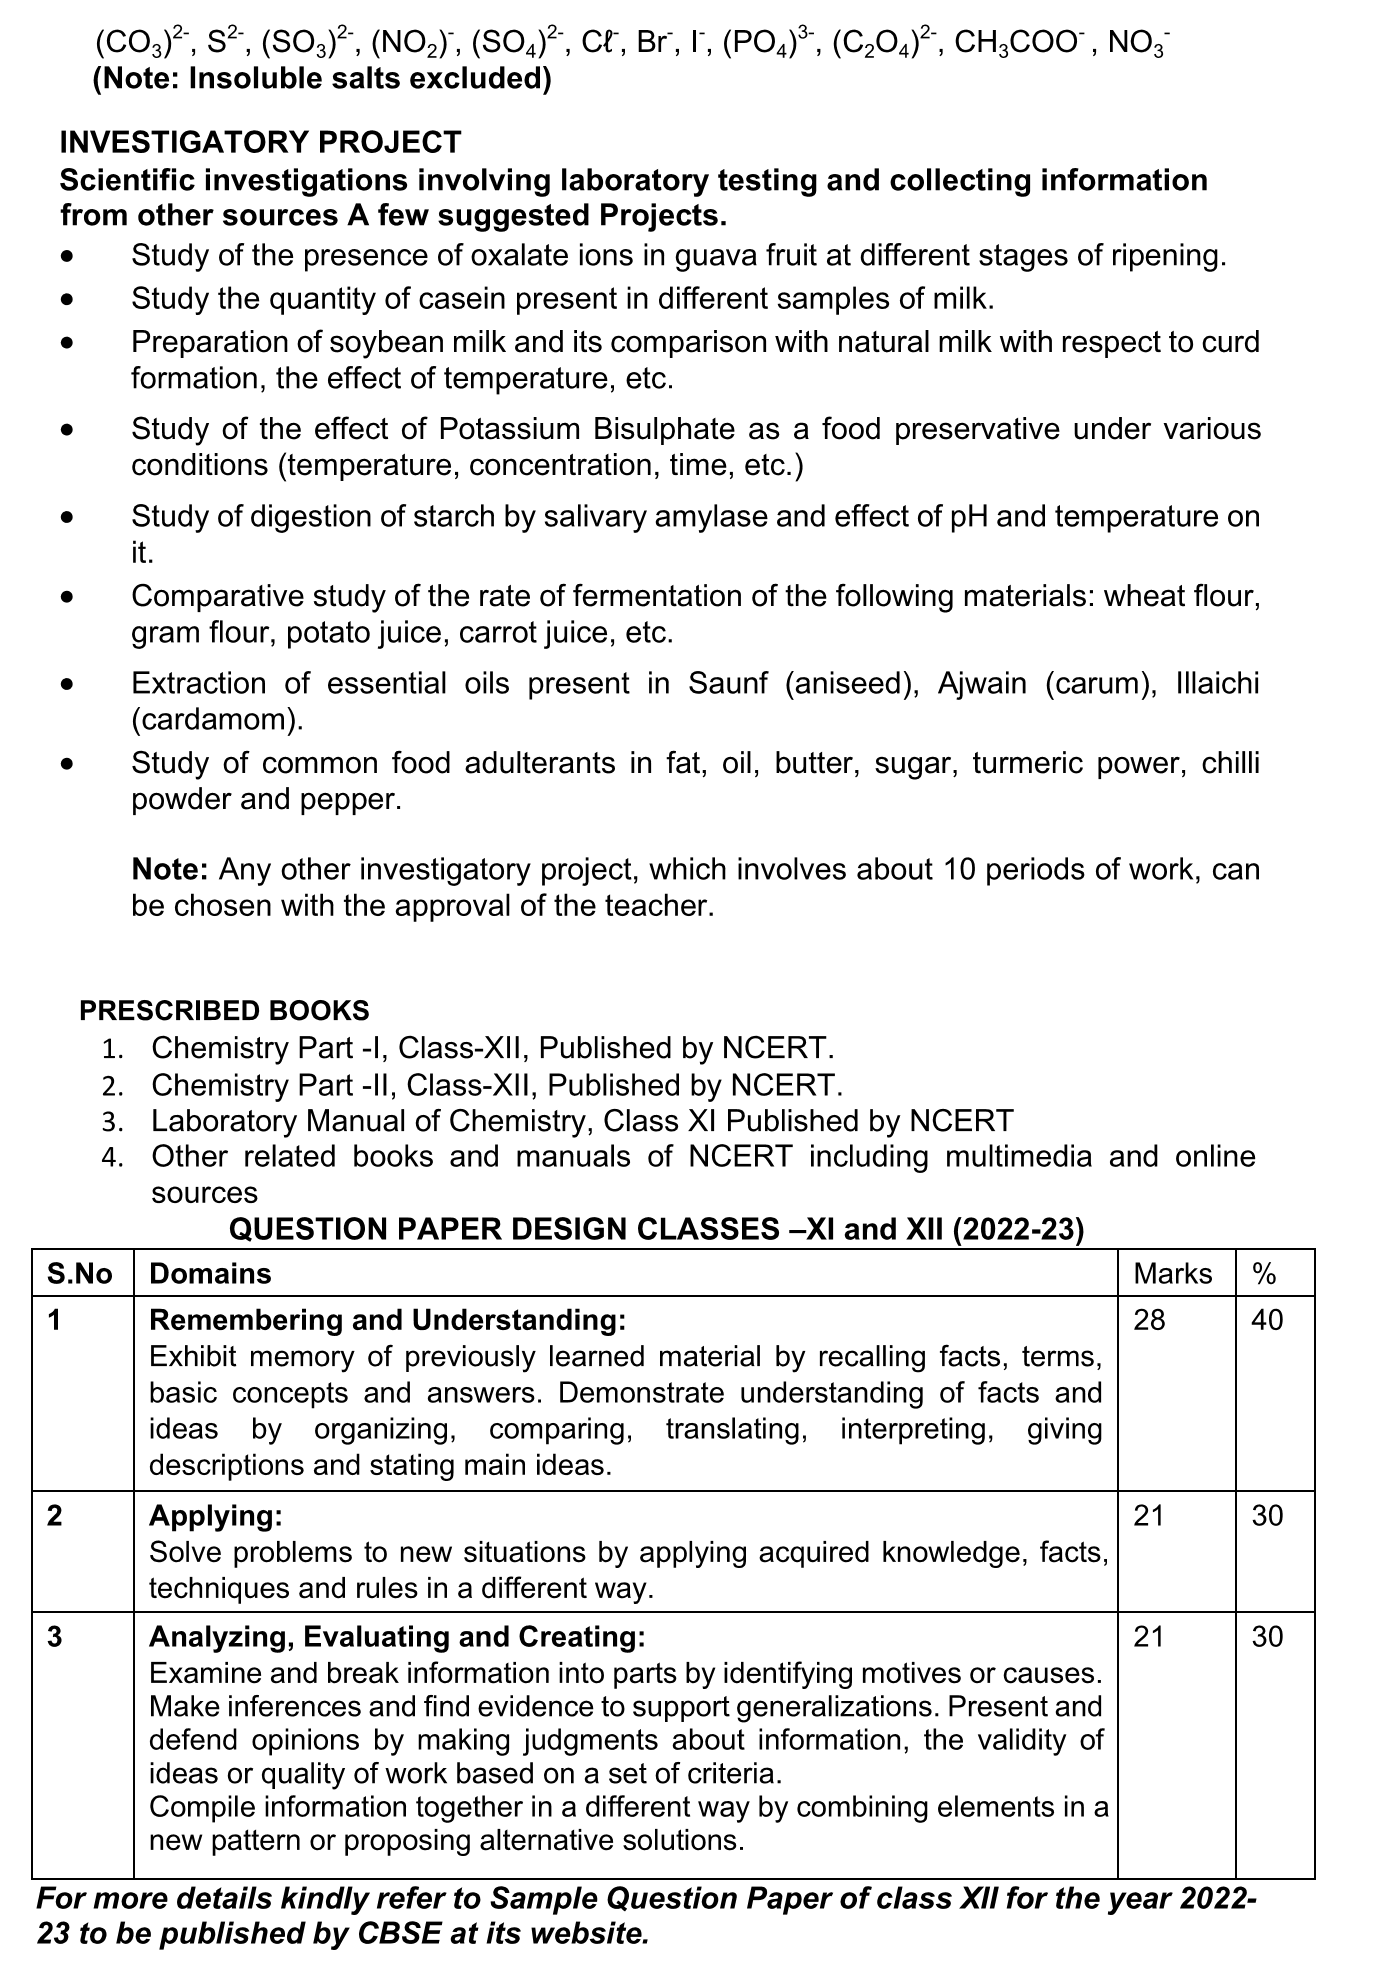 CBSE Class 12 Chemistry Question Paper Design 2022-23